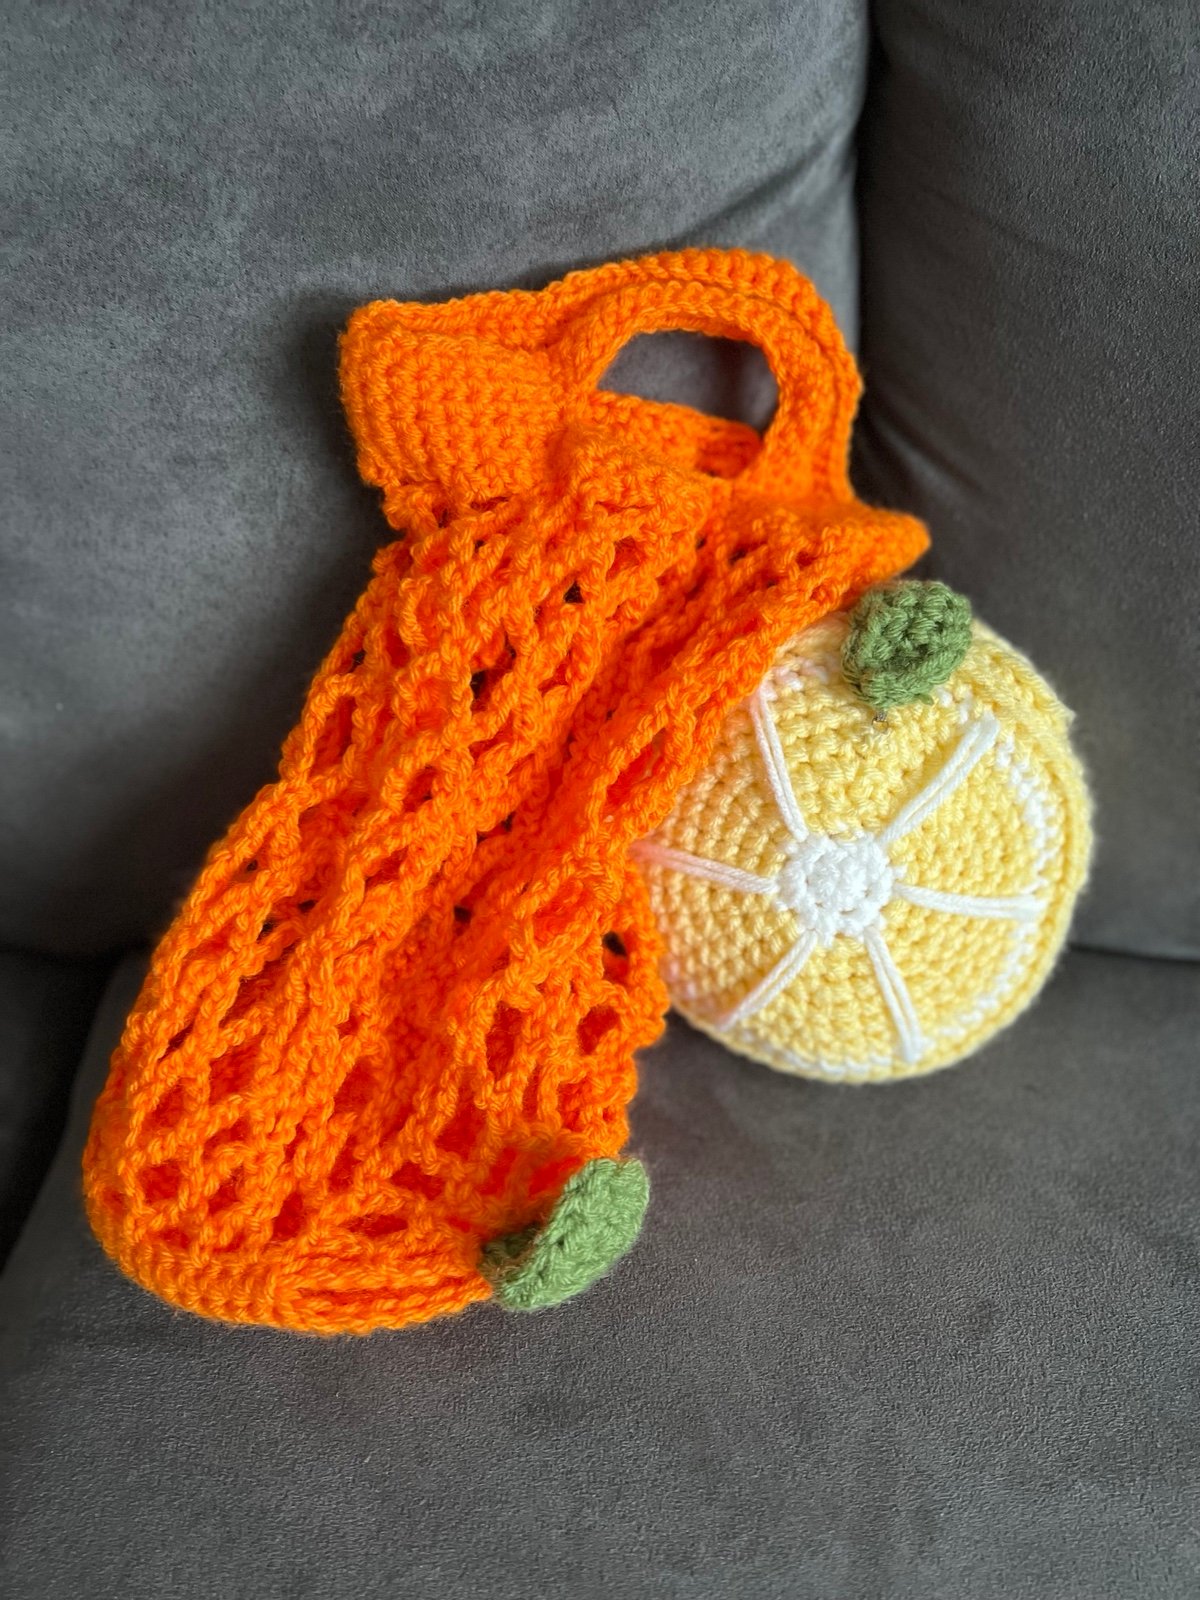 Crochet Market Bags 1UIDUb5gU